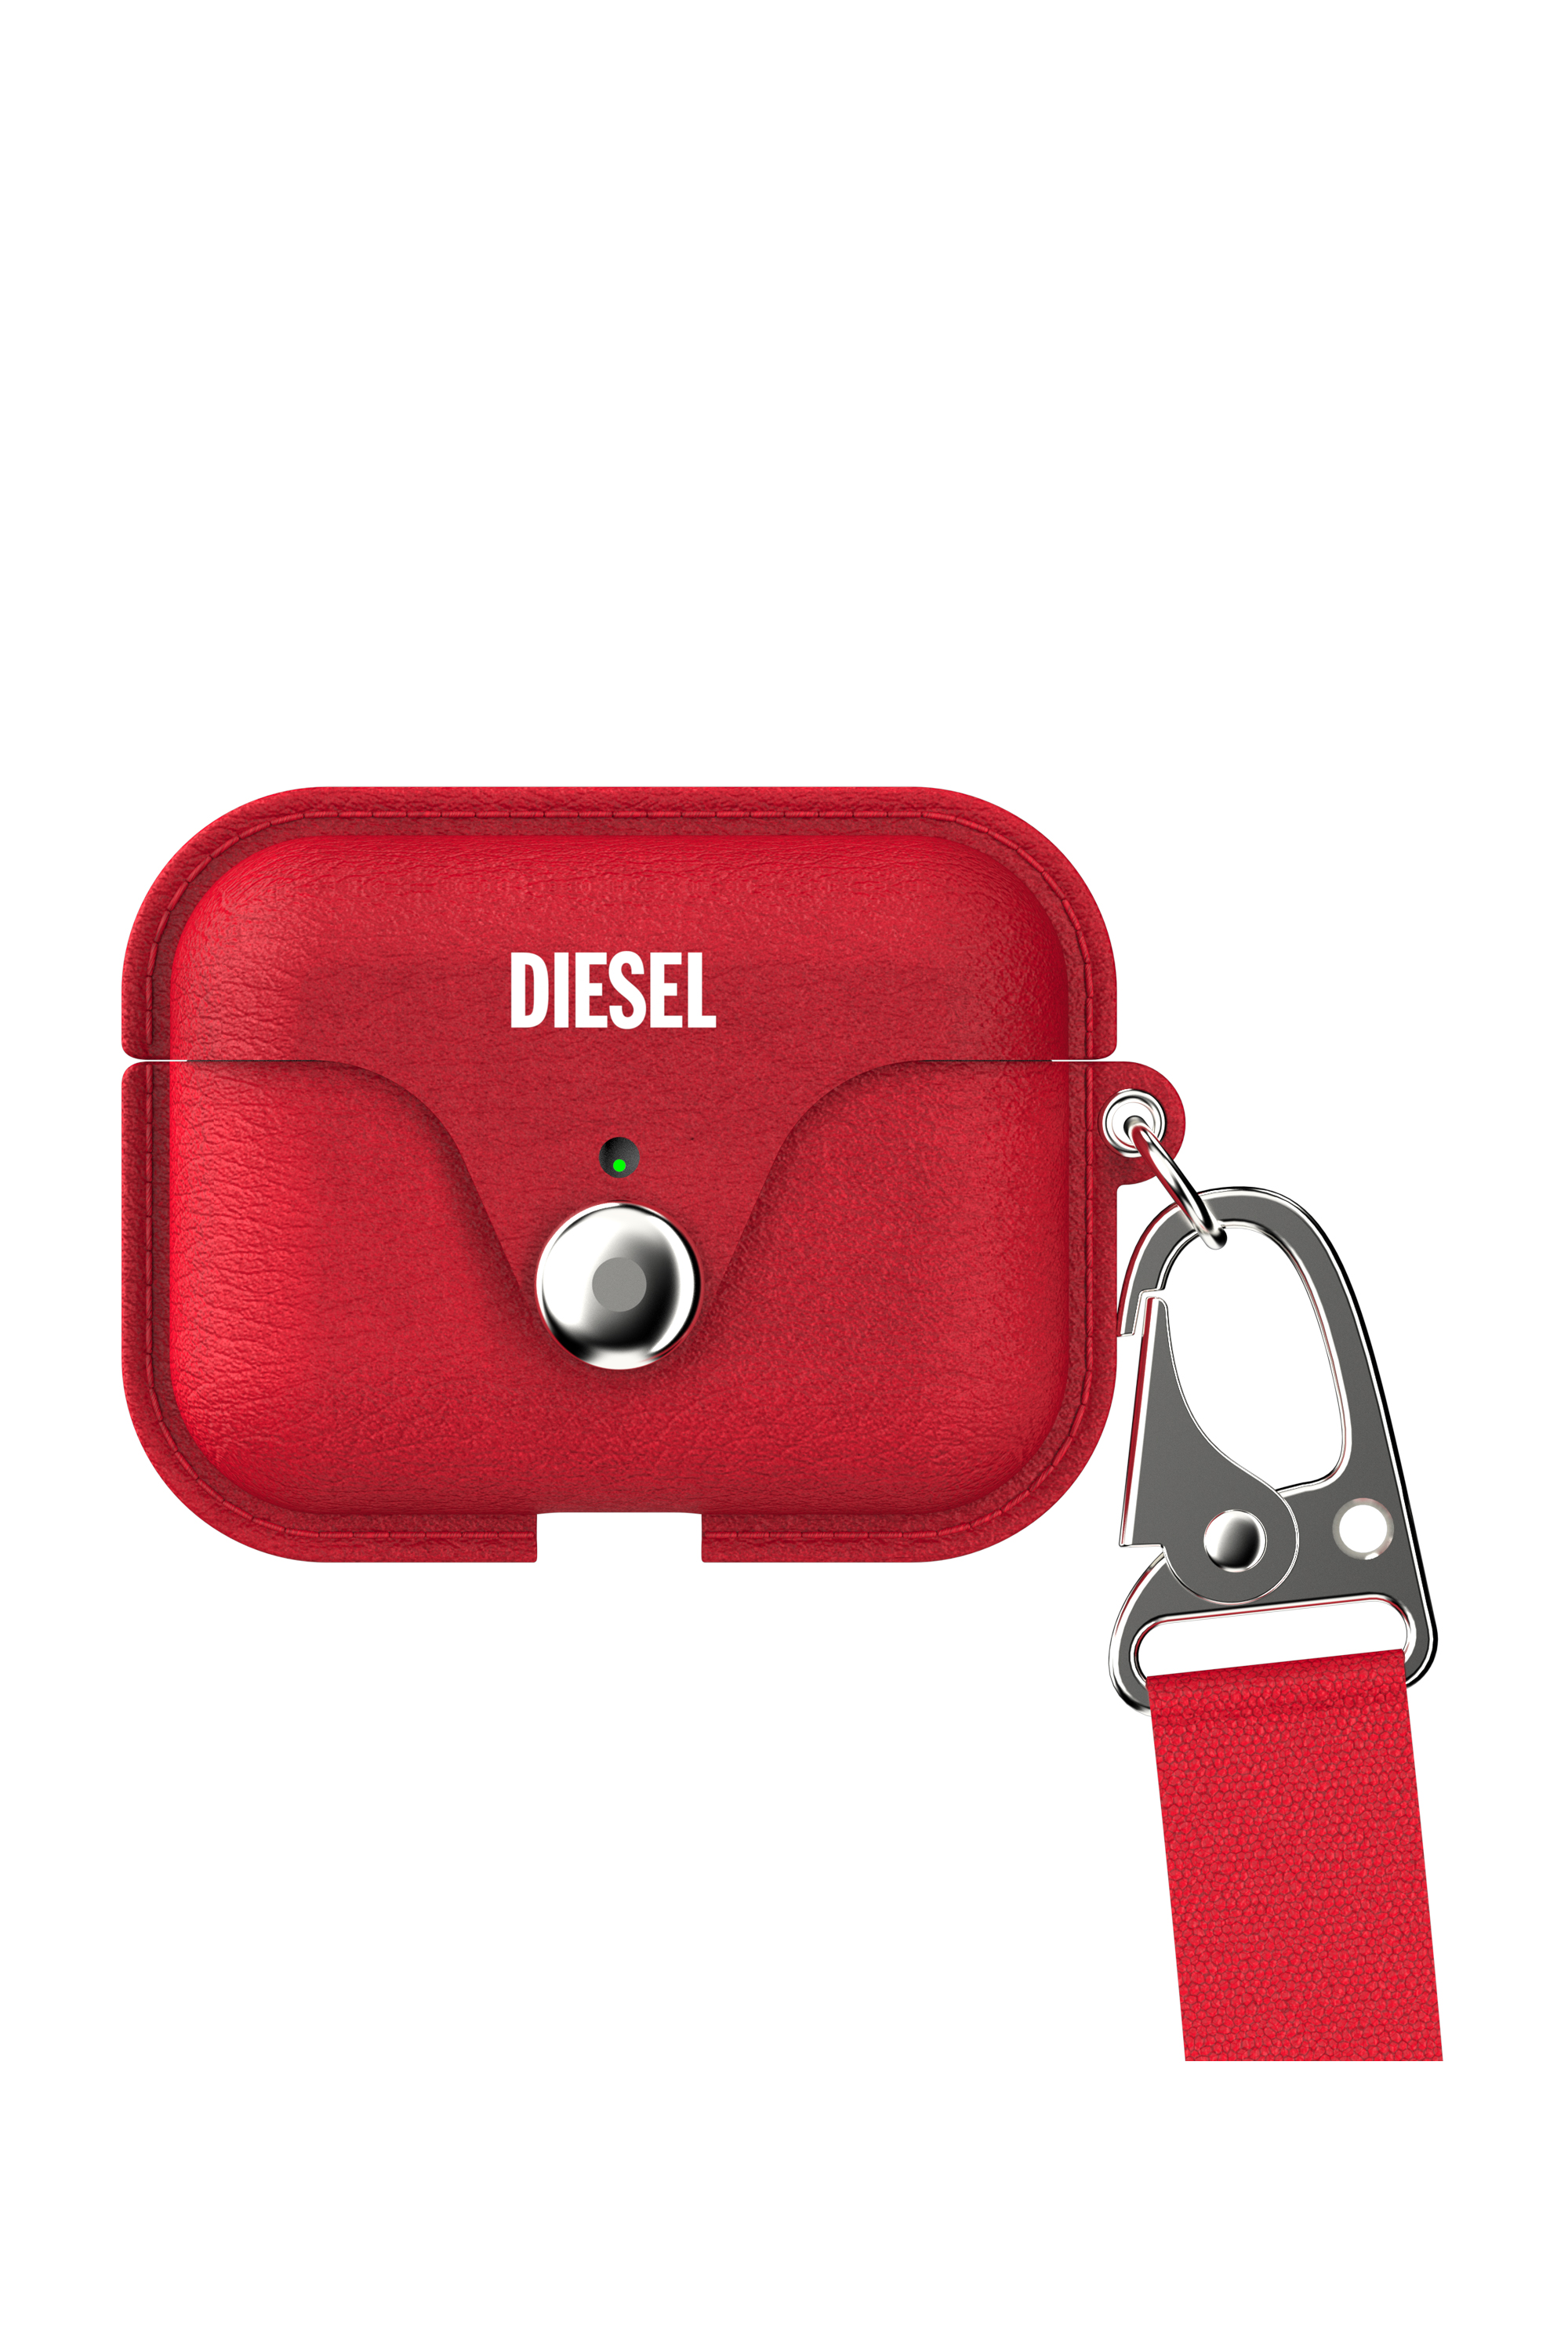 Diesel - 49860 AIRPOD CASE, Red - Image 1